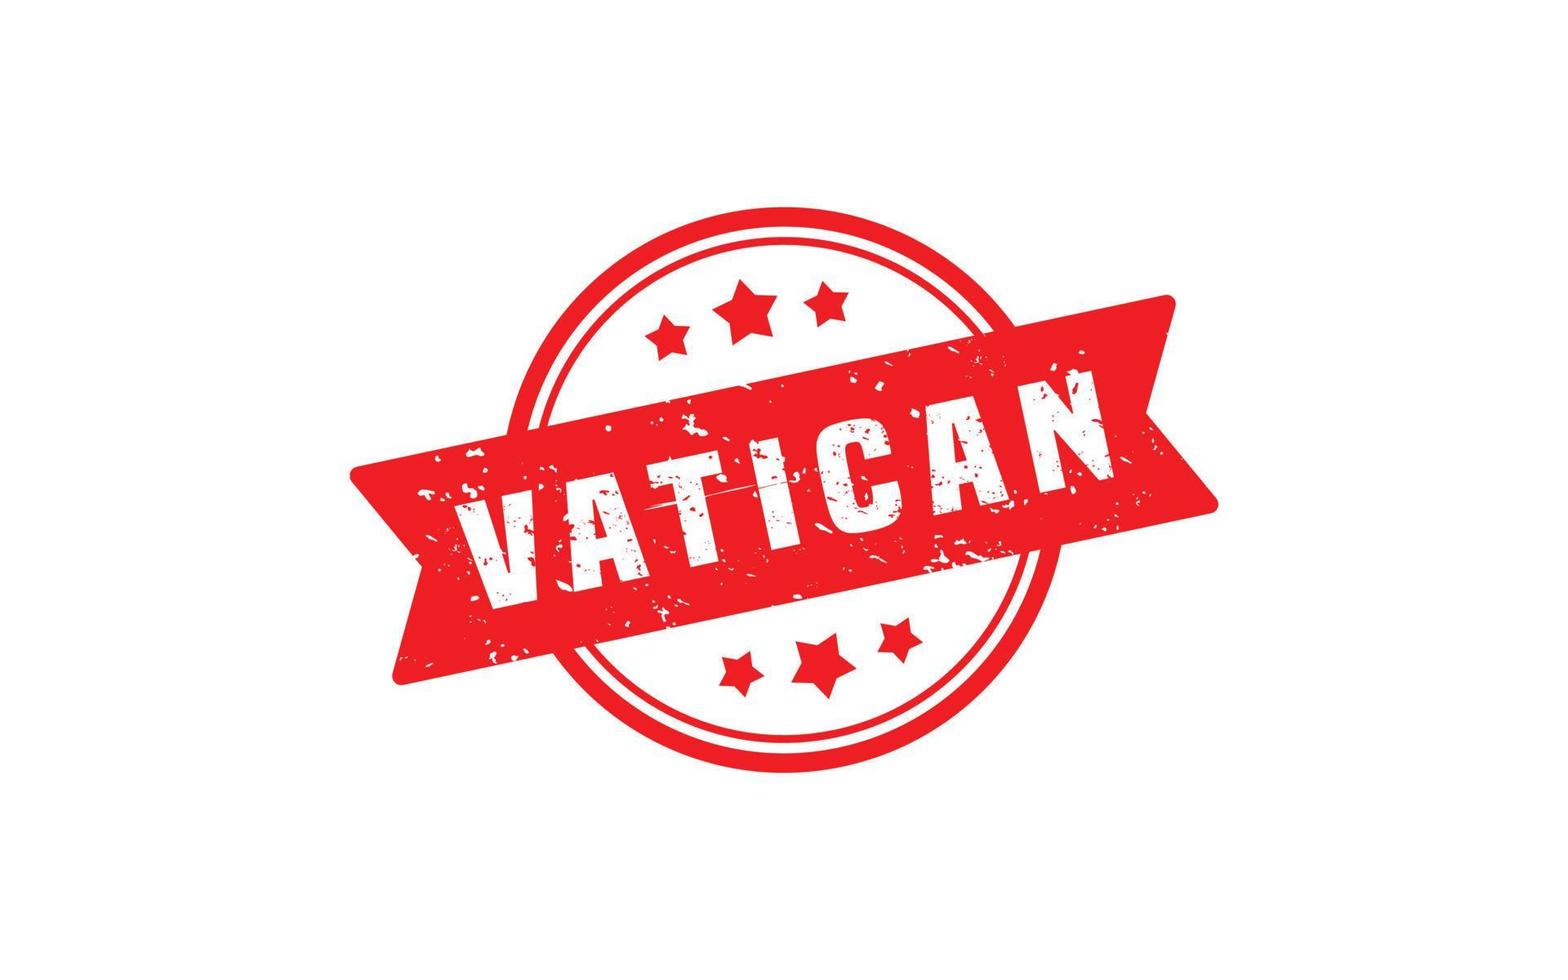 carimbo vaticano com estilo grunge em fundo branco vetor